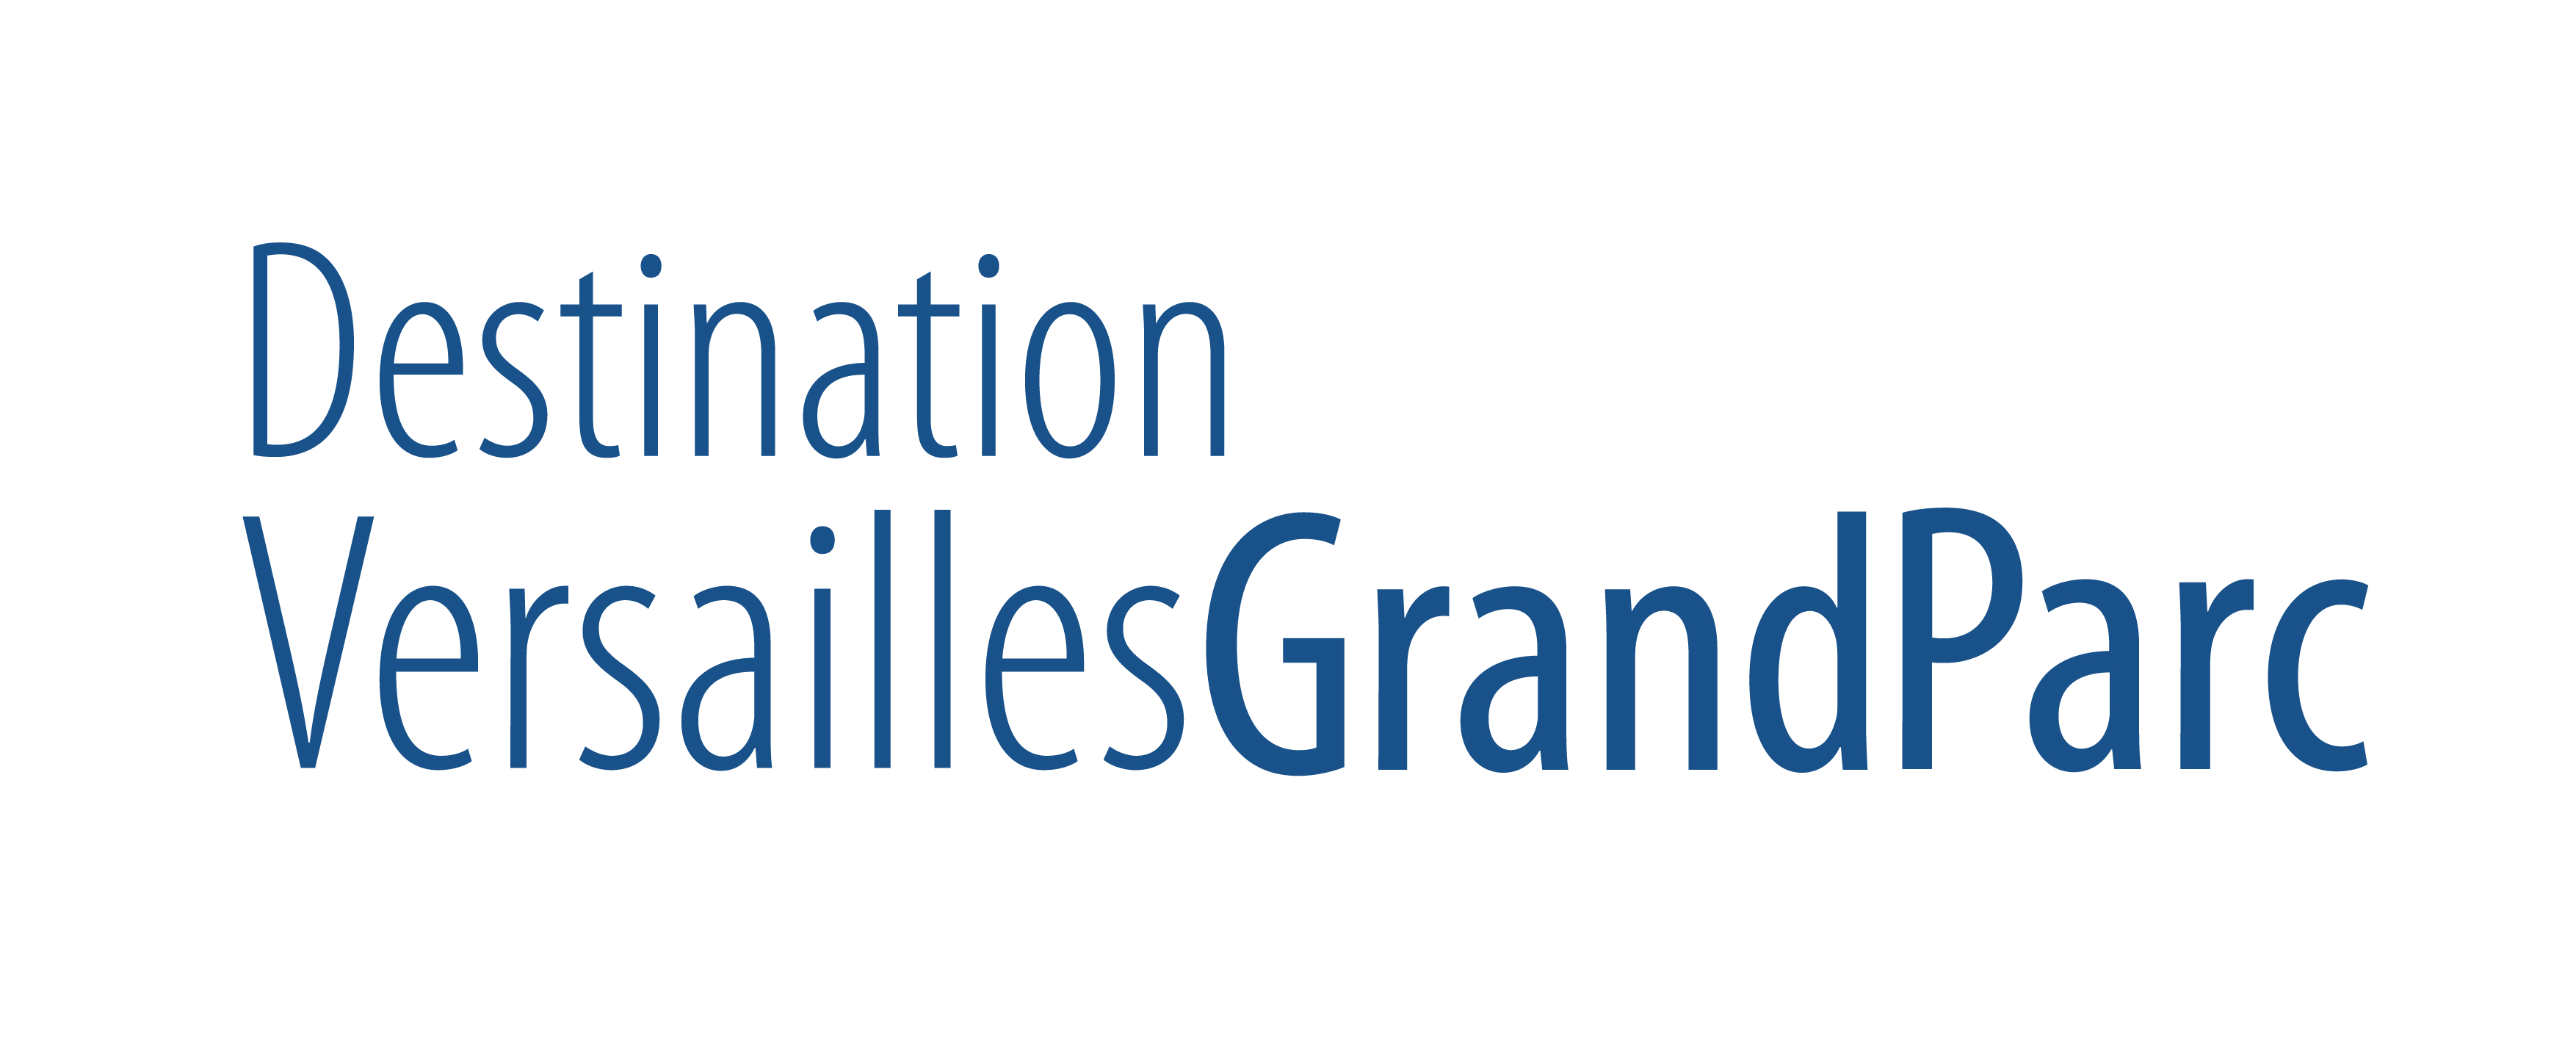 Logo Versailles